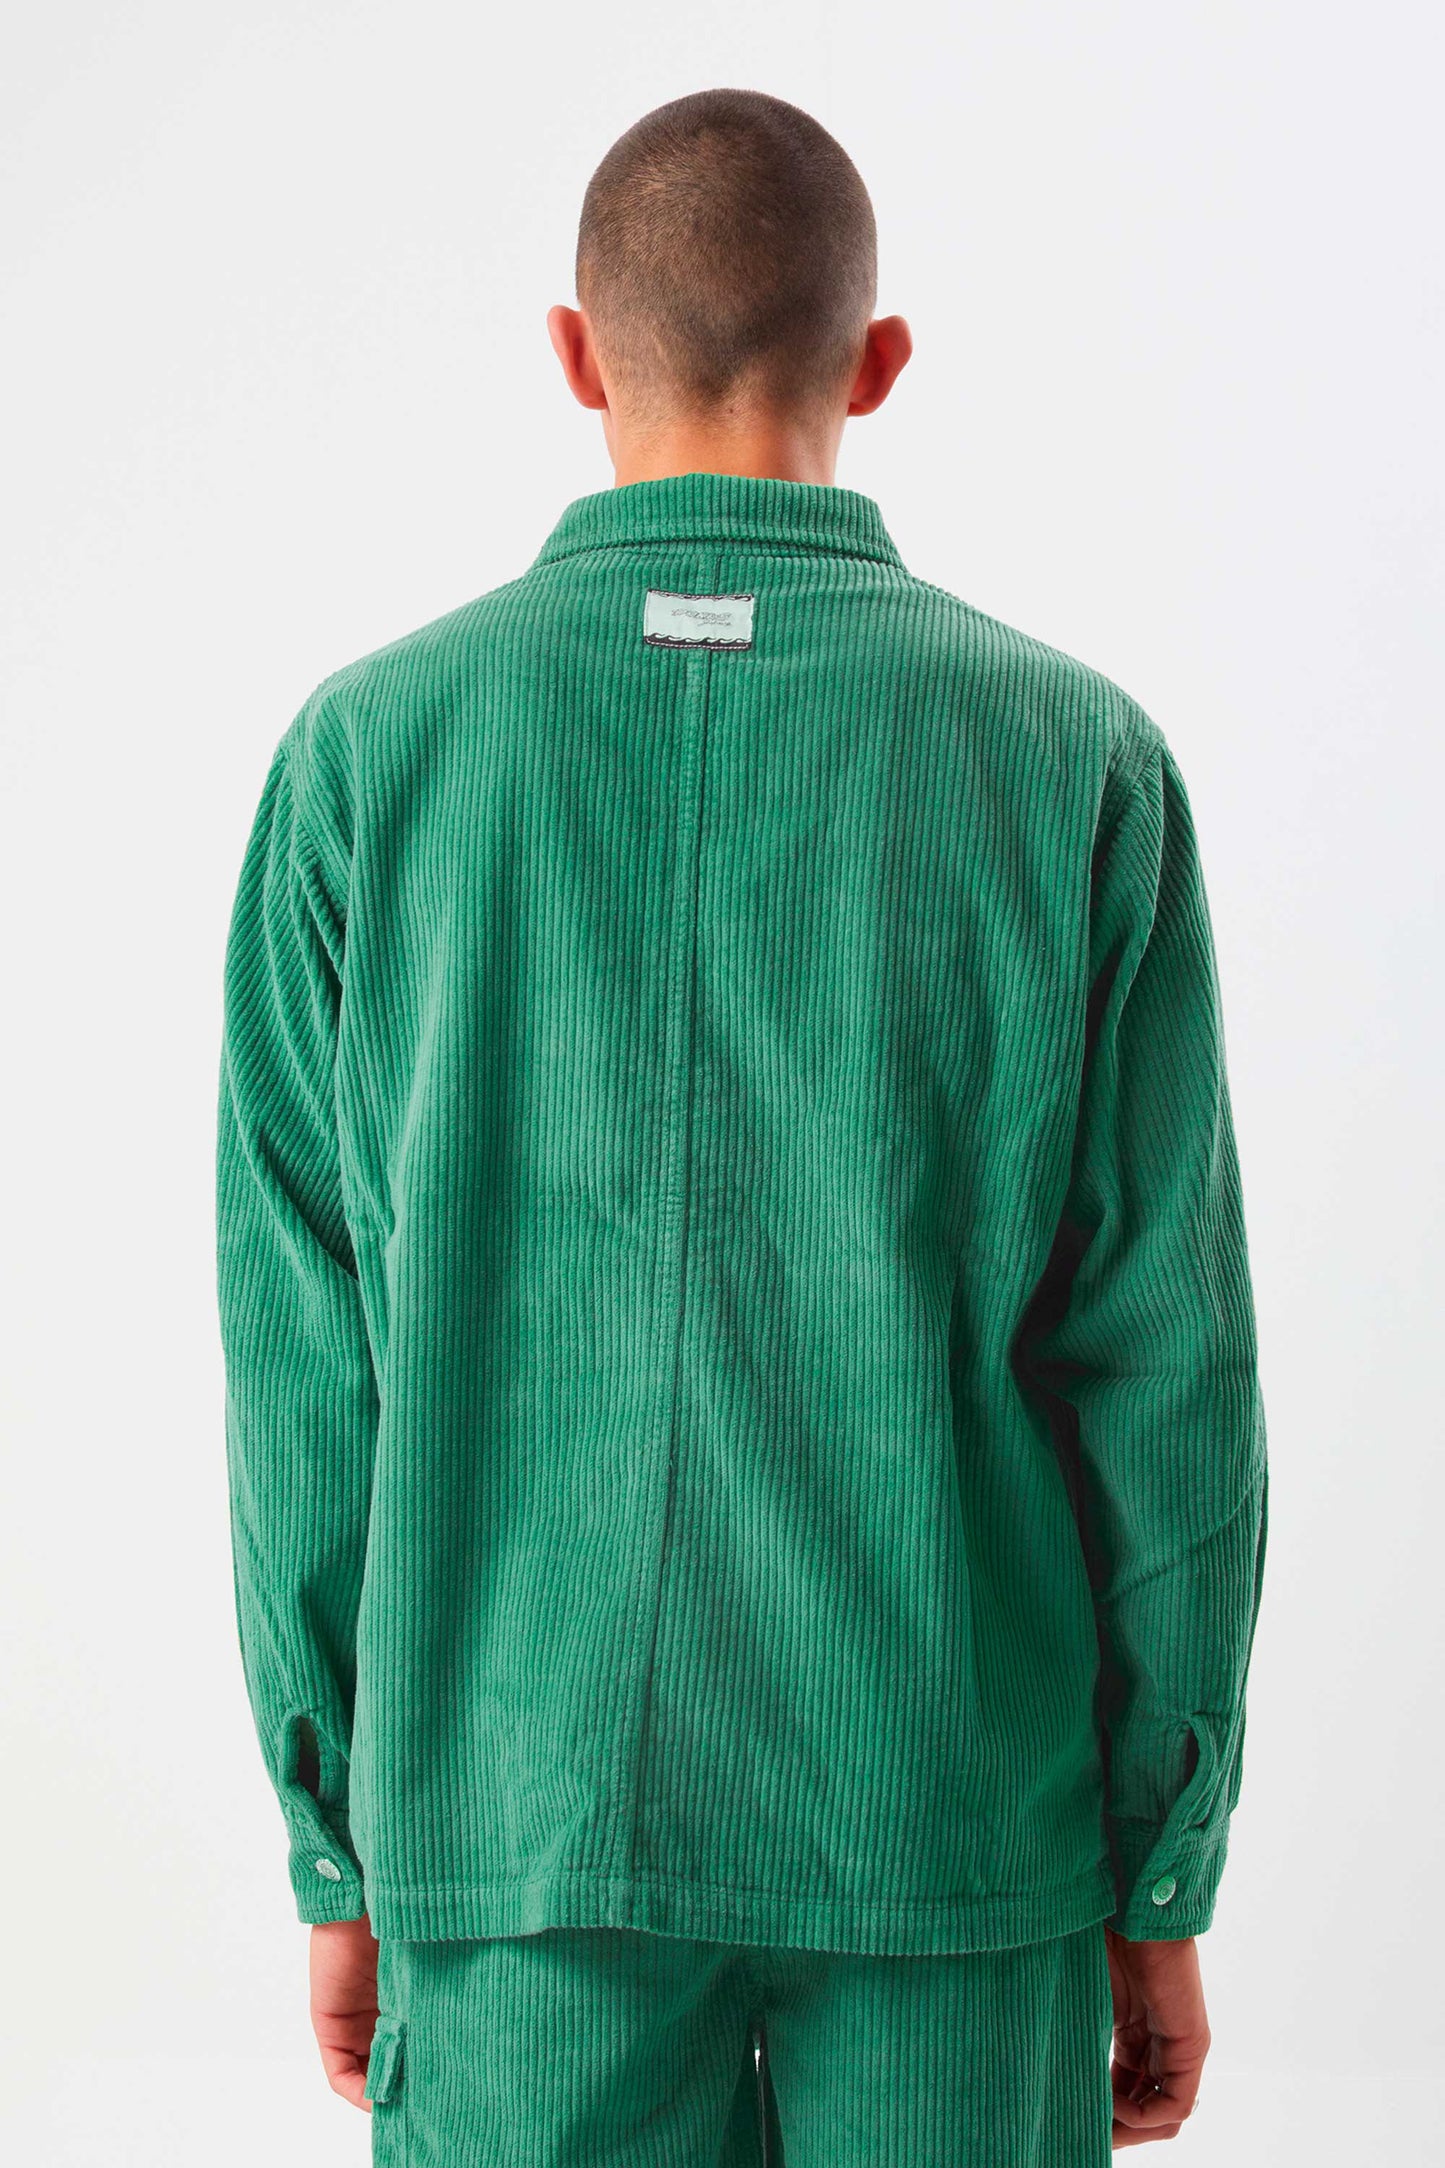 Pukas-Surf-Shop-Pukas-Clothing-Jacket-Corduroy-green